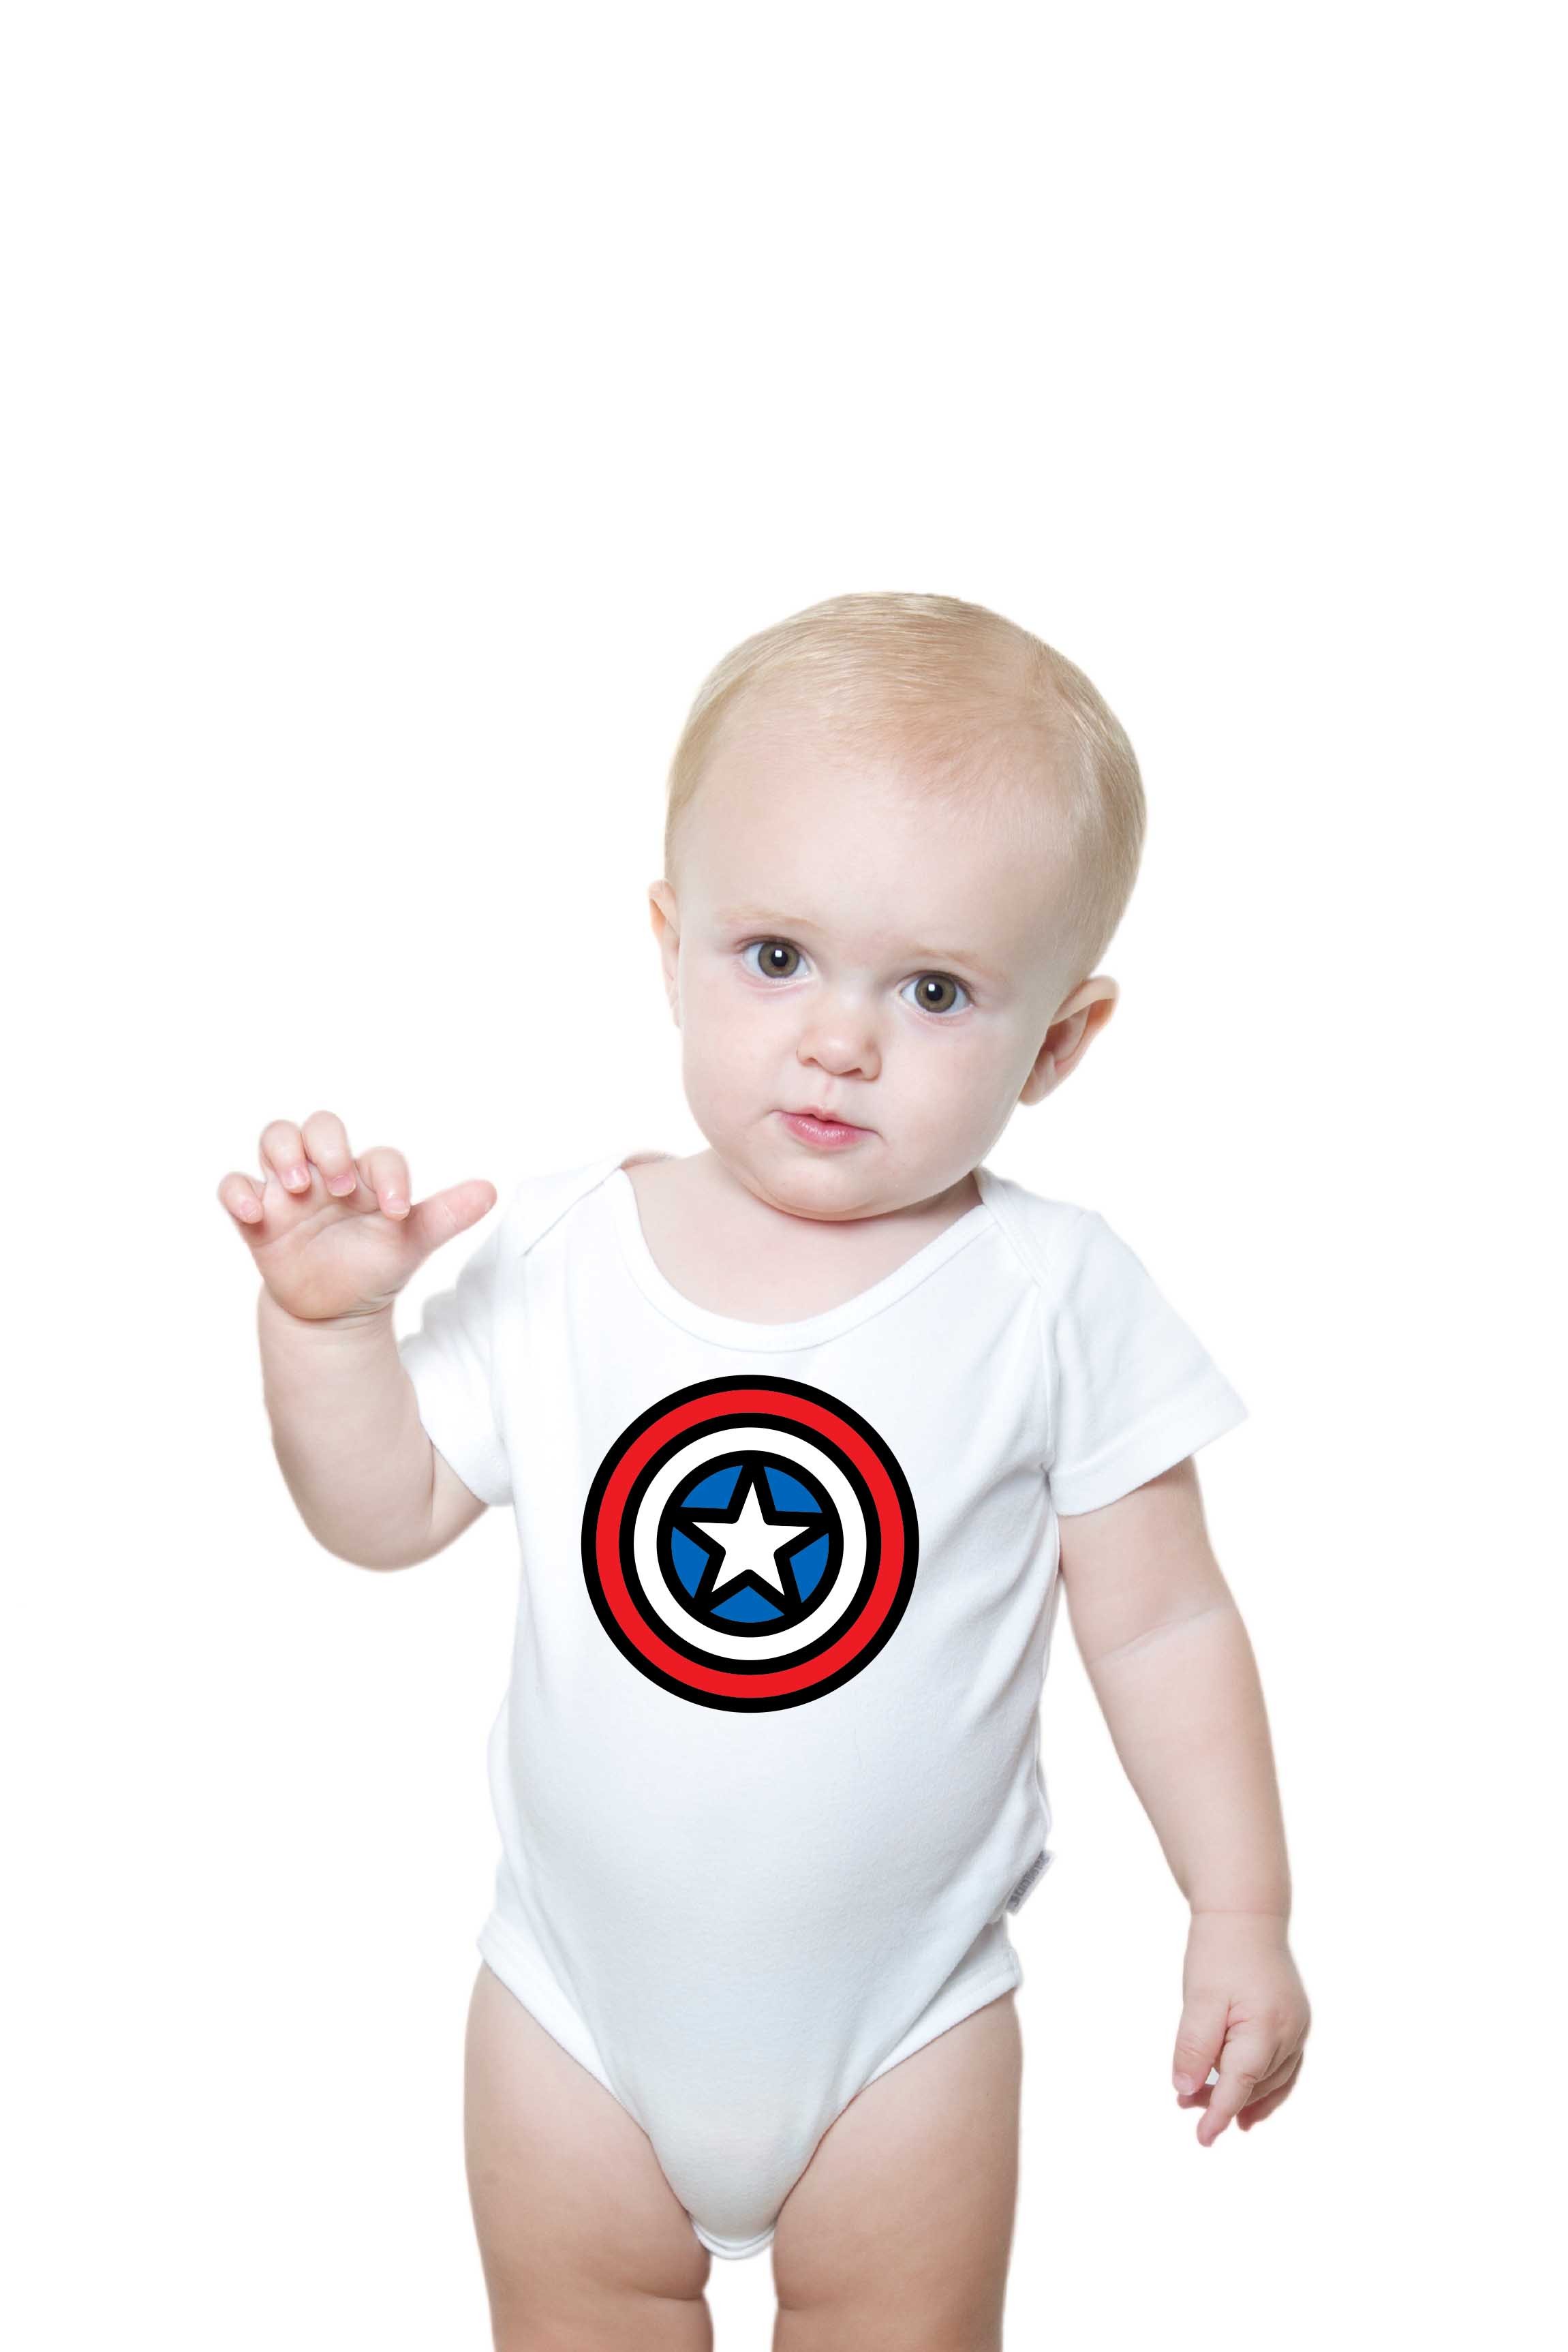 Etna Pardon Kust Baby romper Captain America - Shop